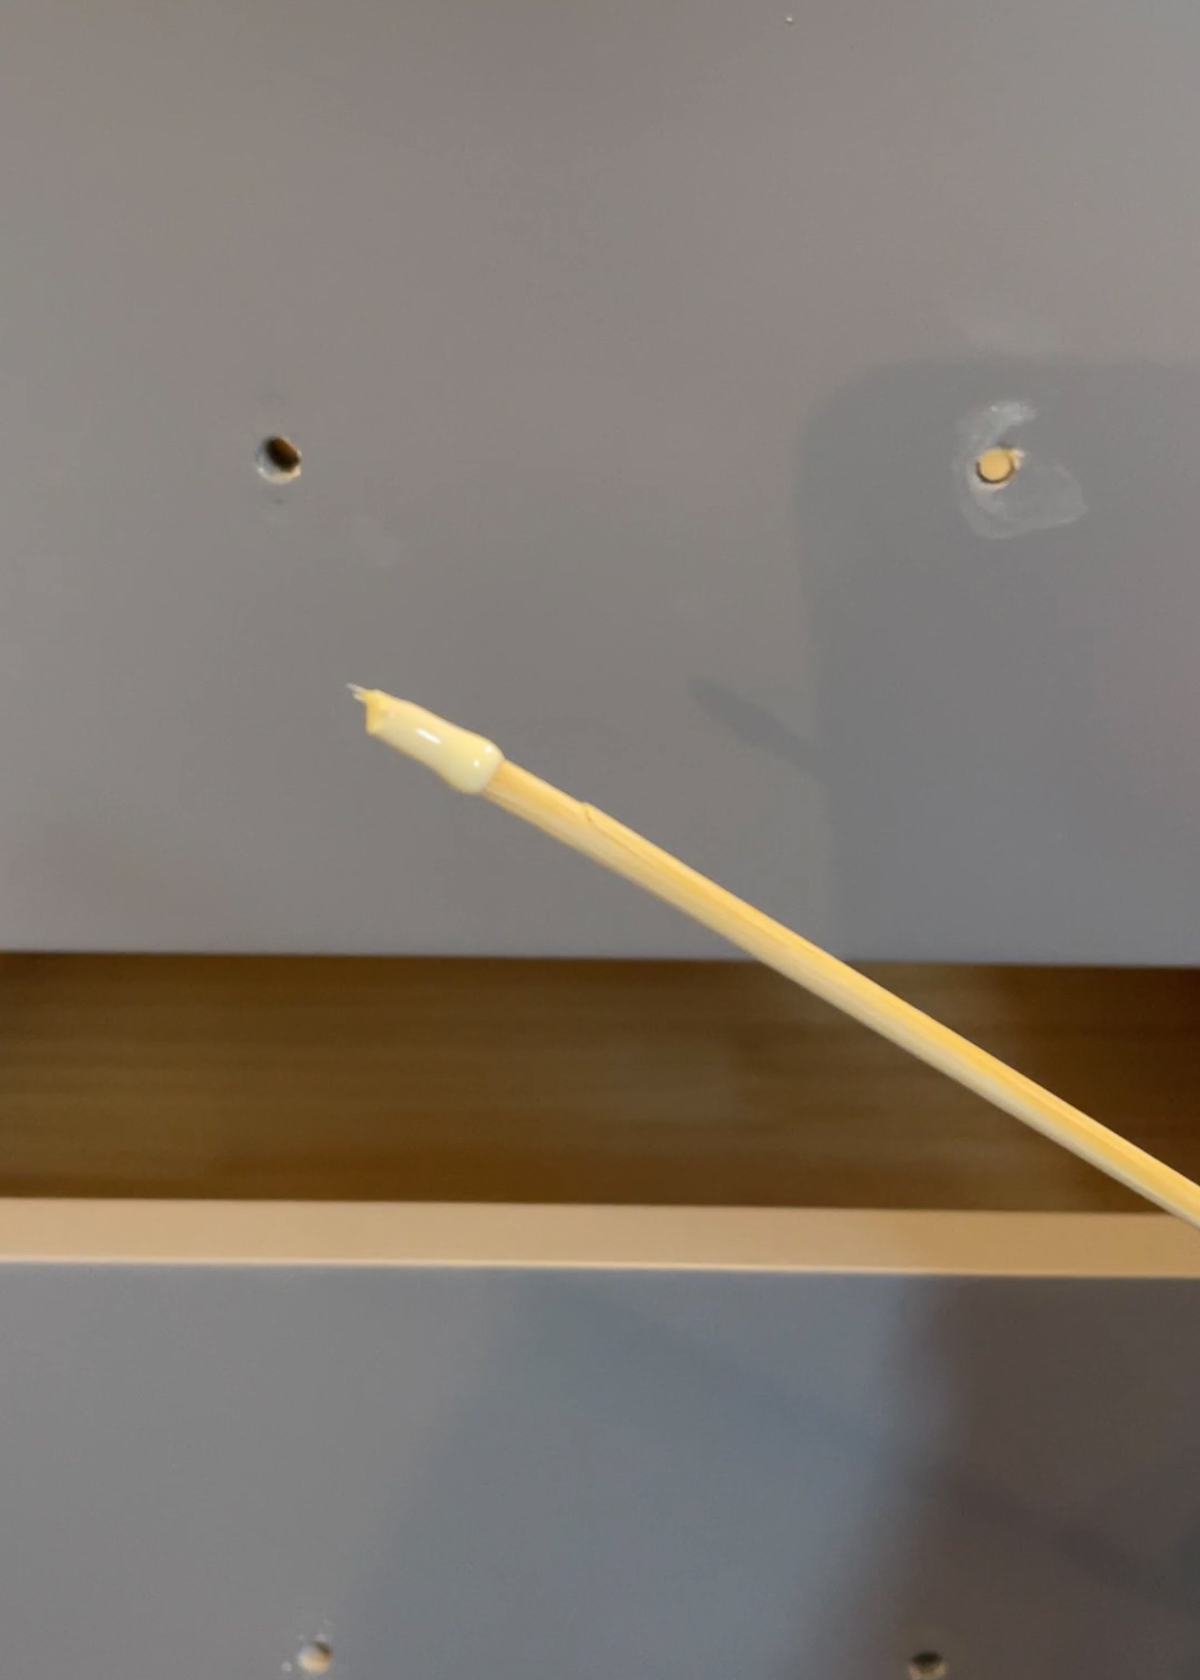 wooden skewer with wood glue on tip